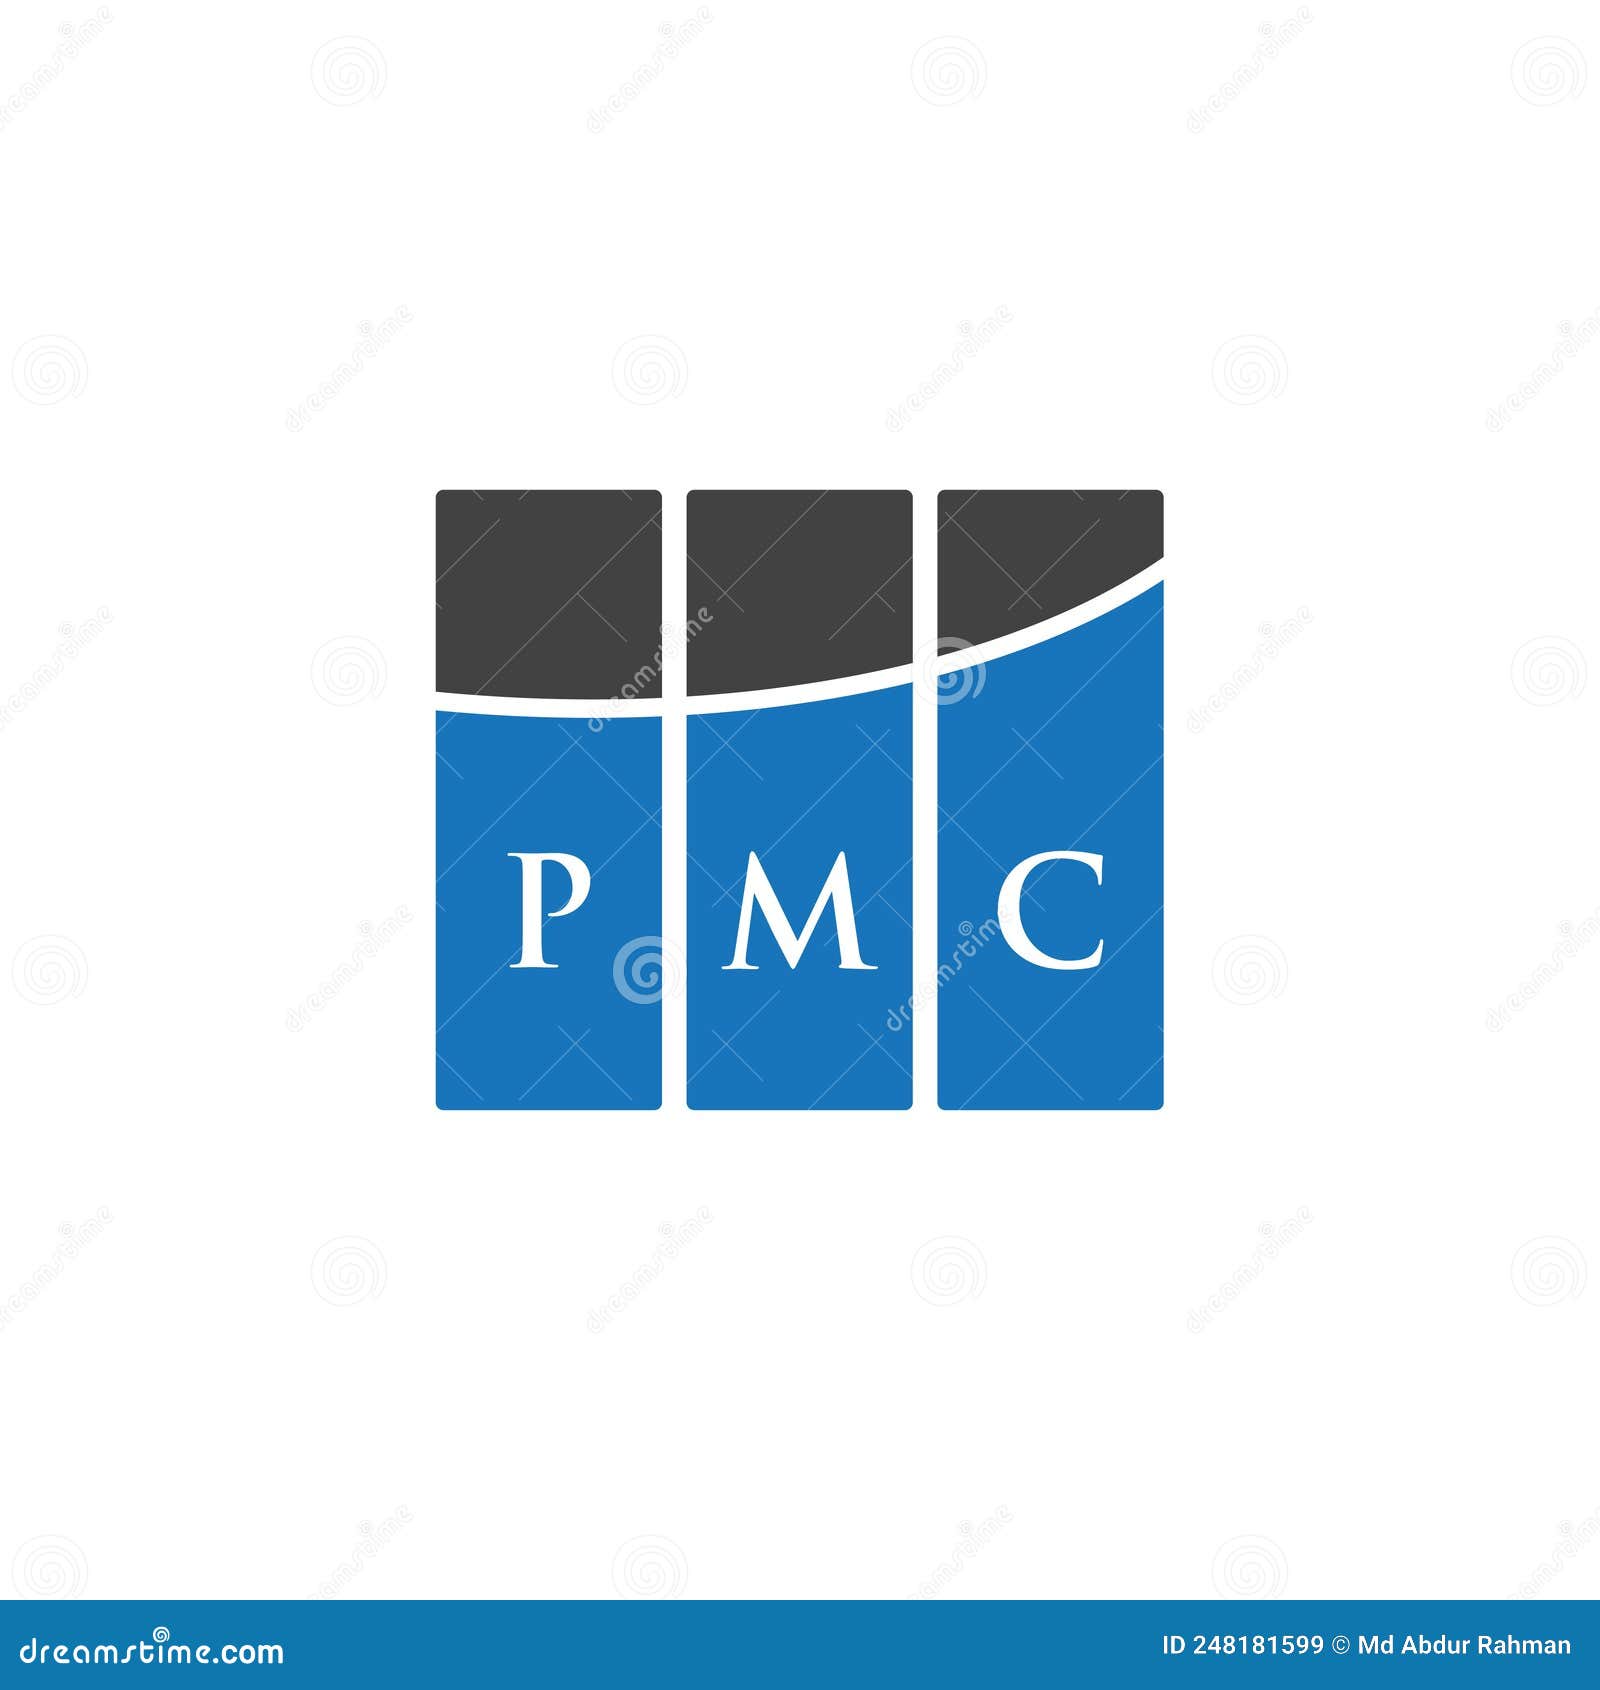 pmc letter logo  on white background. pmc creative initials letter logo concept. pmc letter .pmc letter logo  on